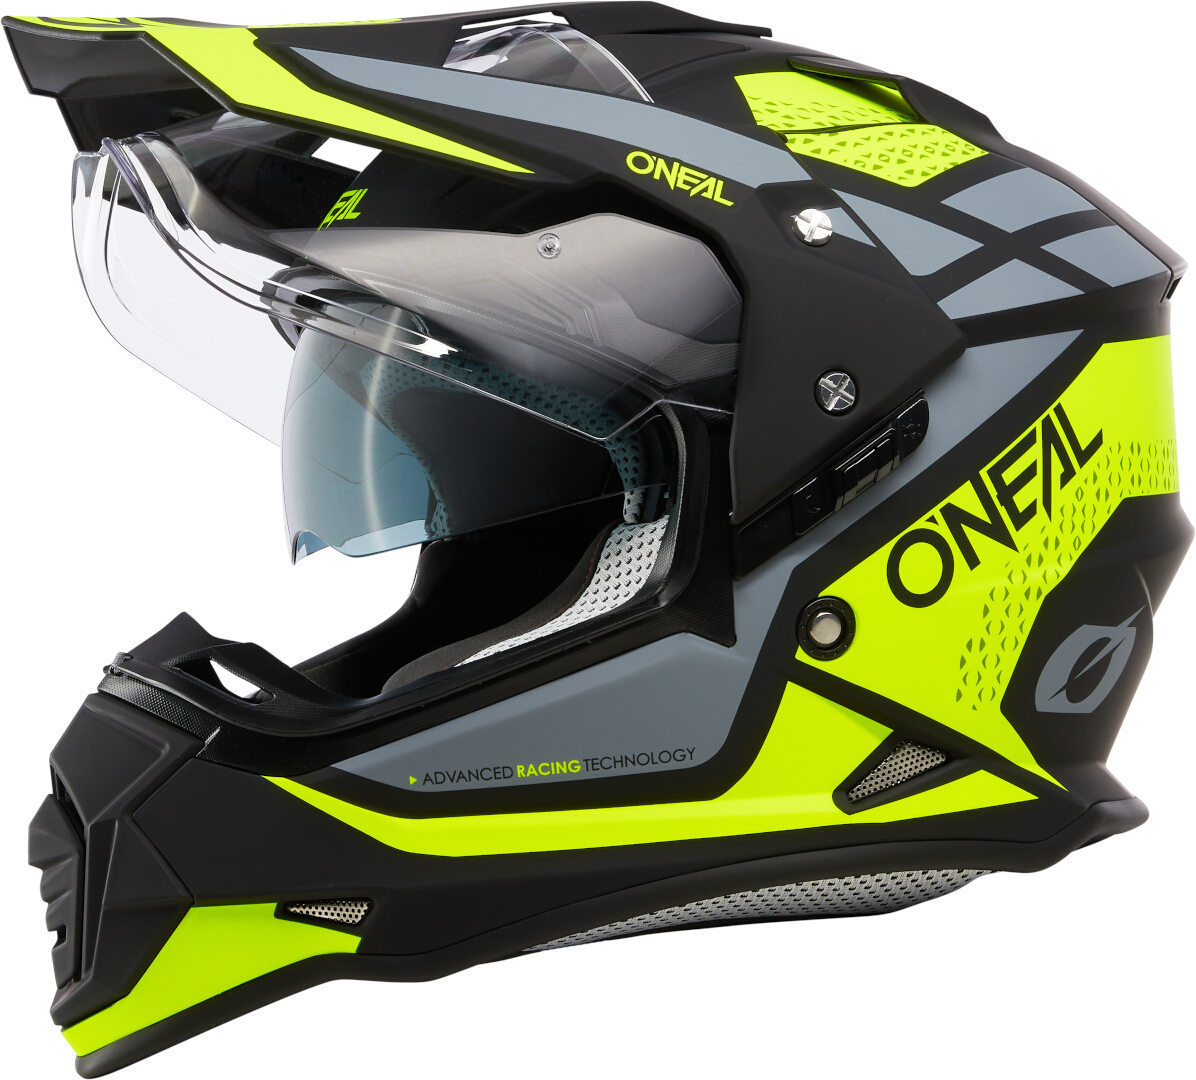 Oneal Sierra R Motocross Helm, schwarz-gelb, Größe S